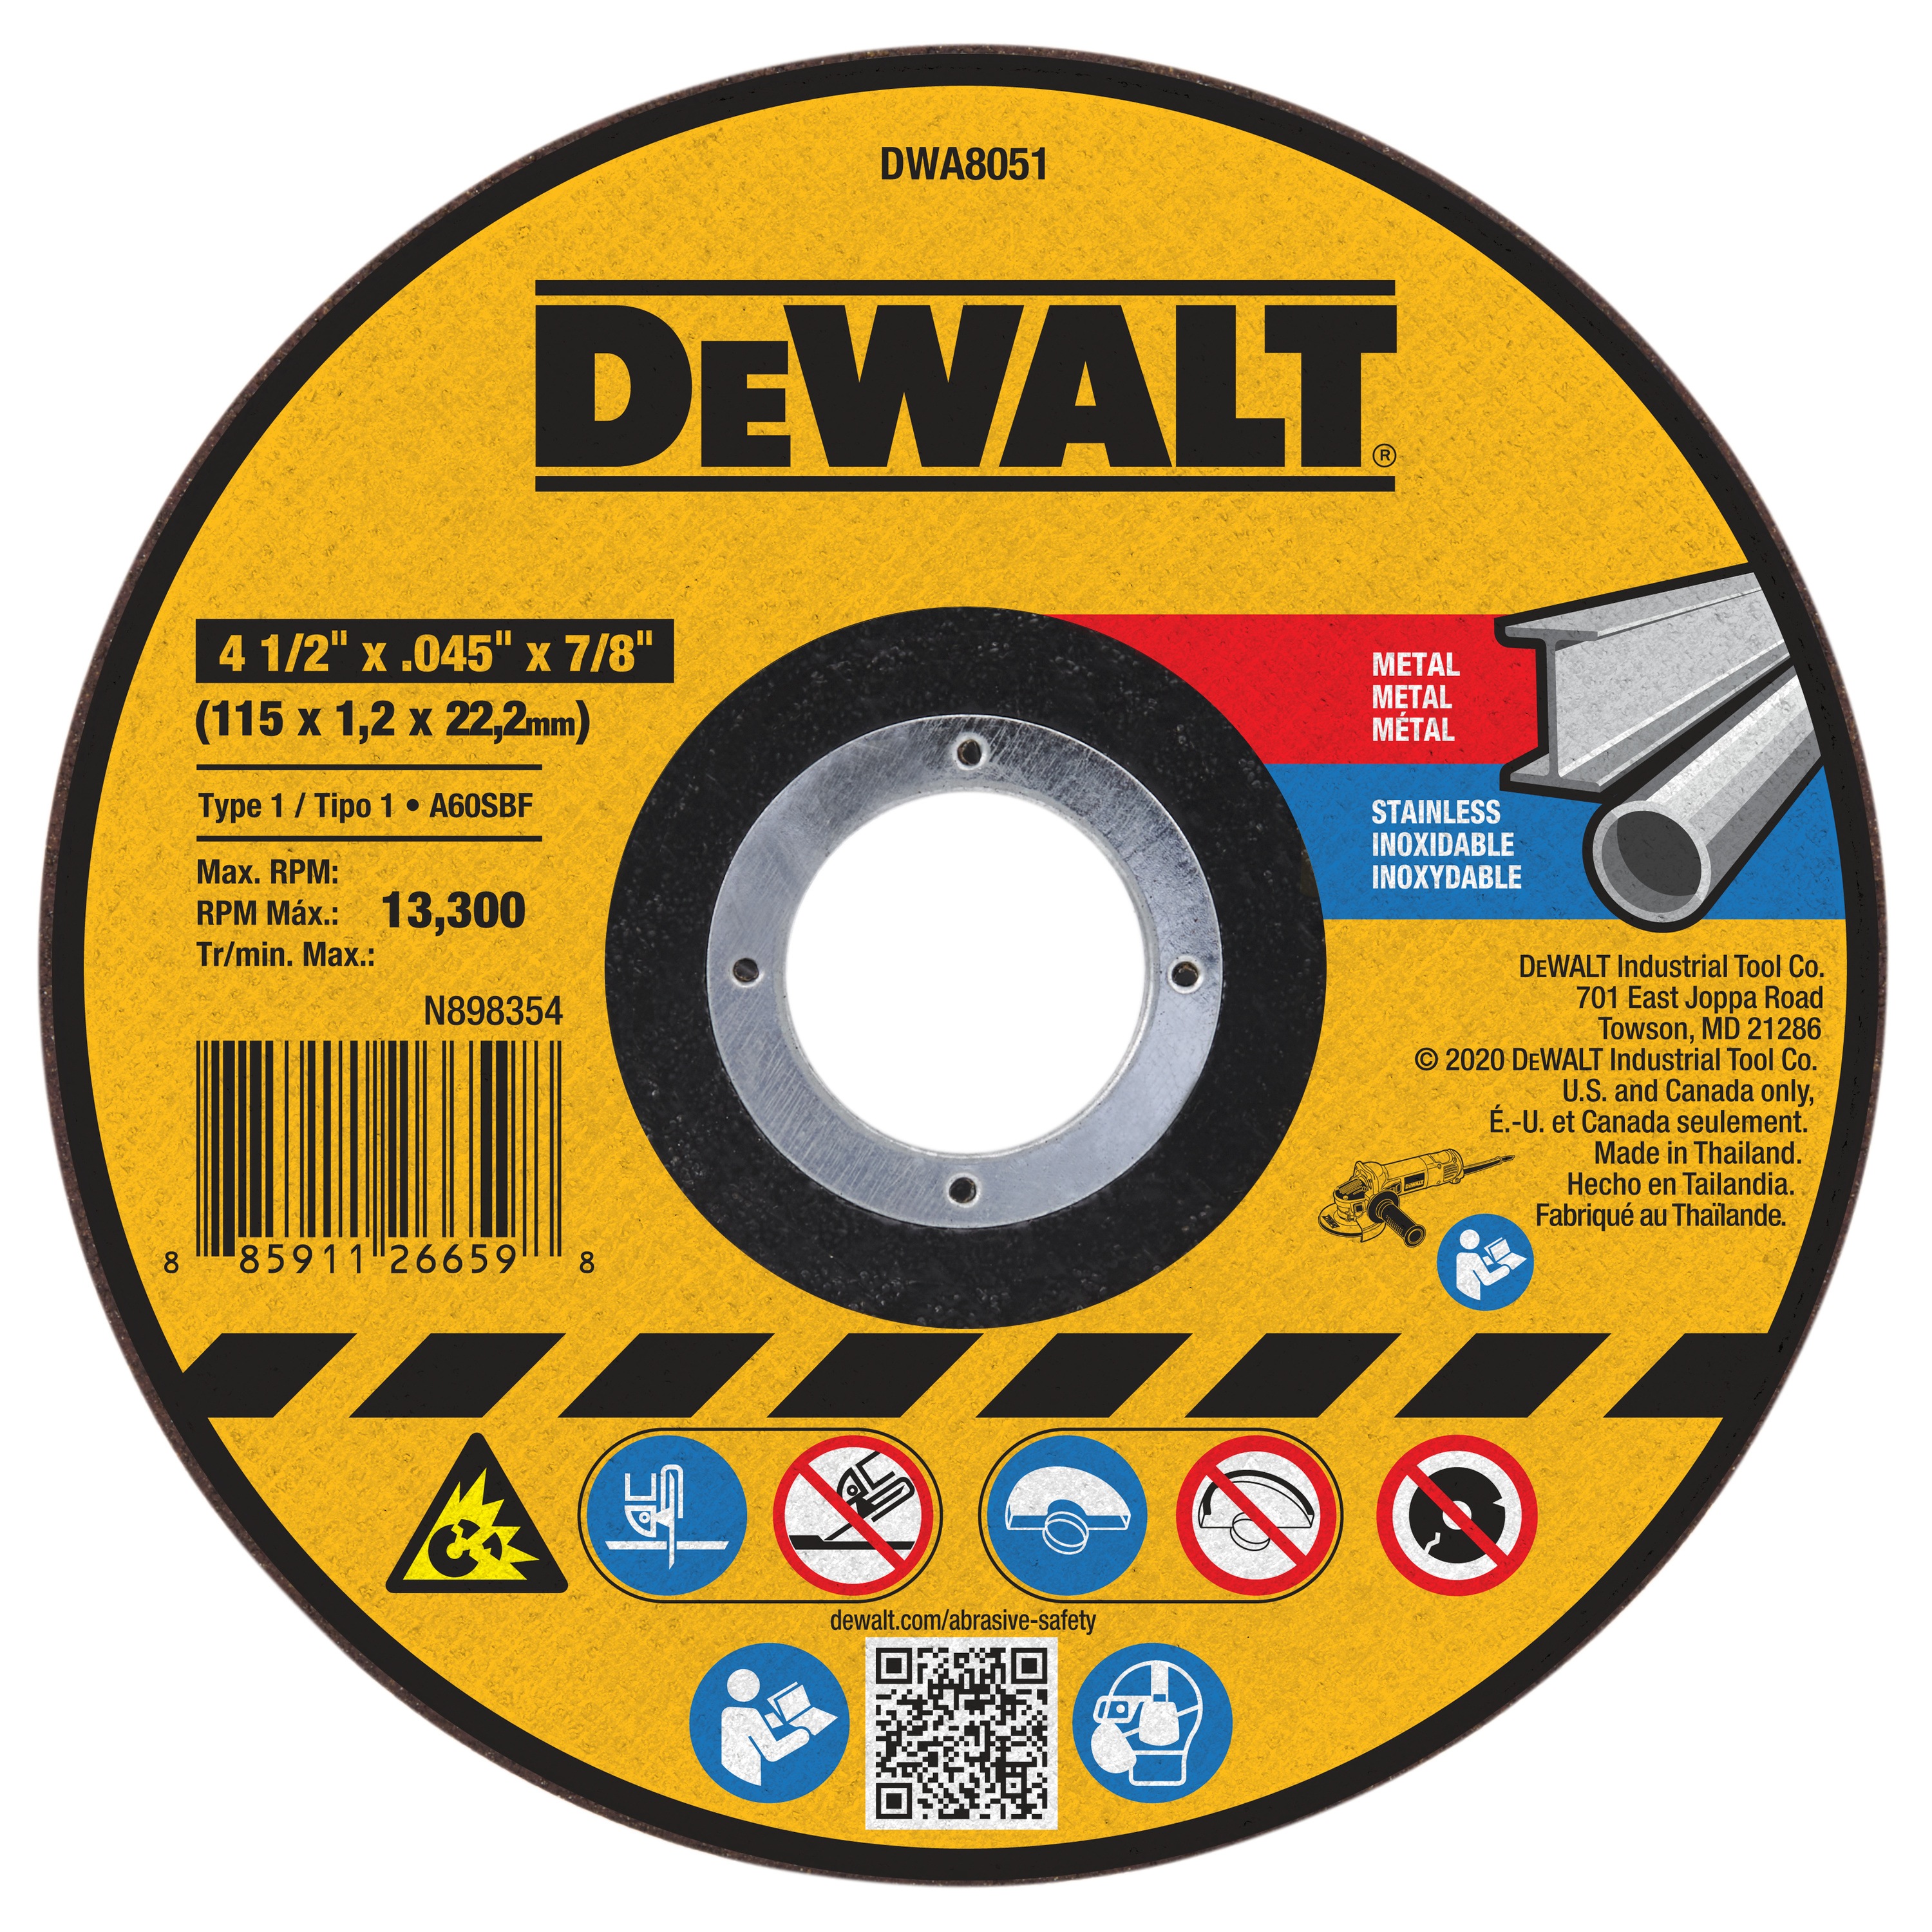 DEWALT - General Purpose Cutting Wheels - DWA8051